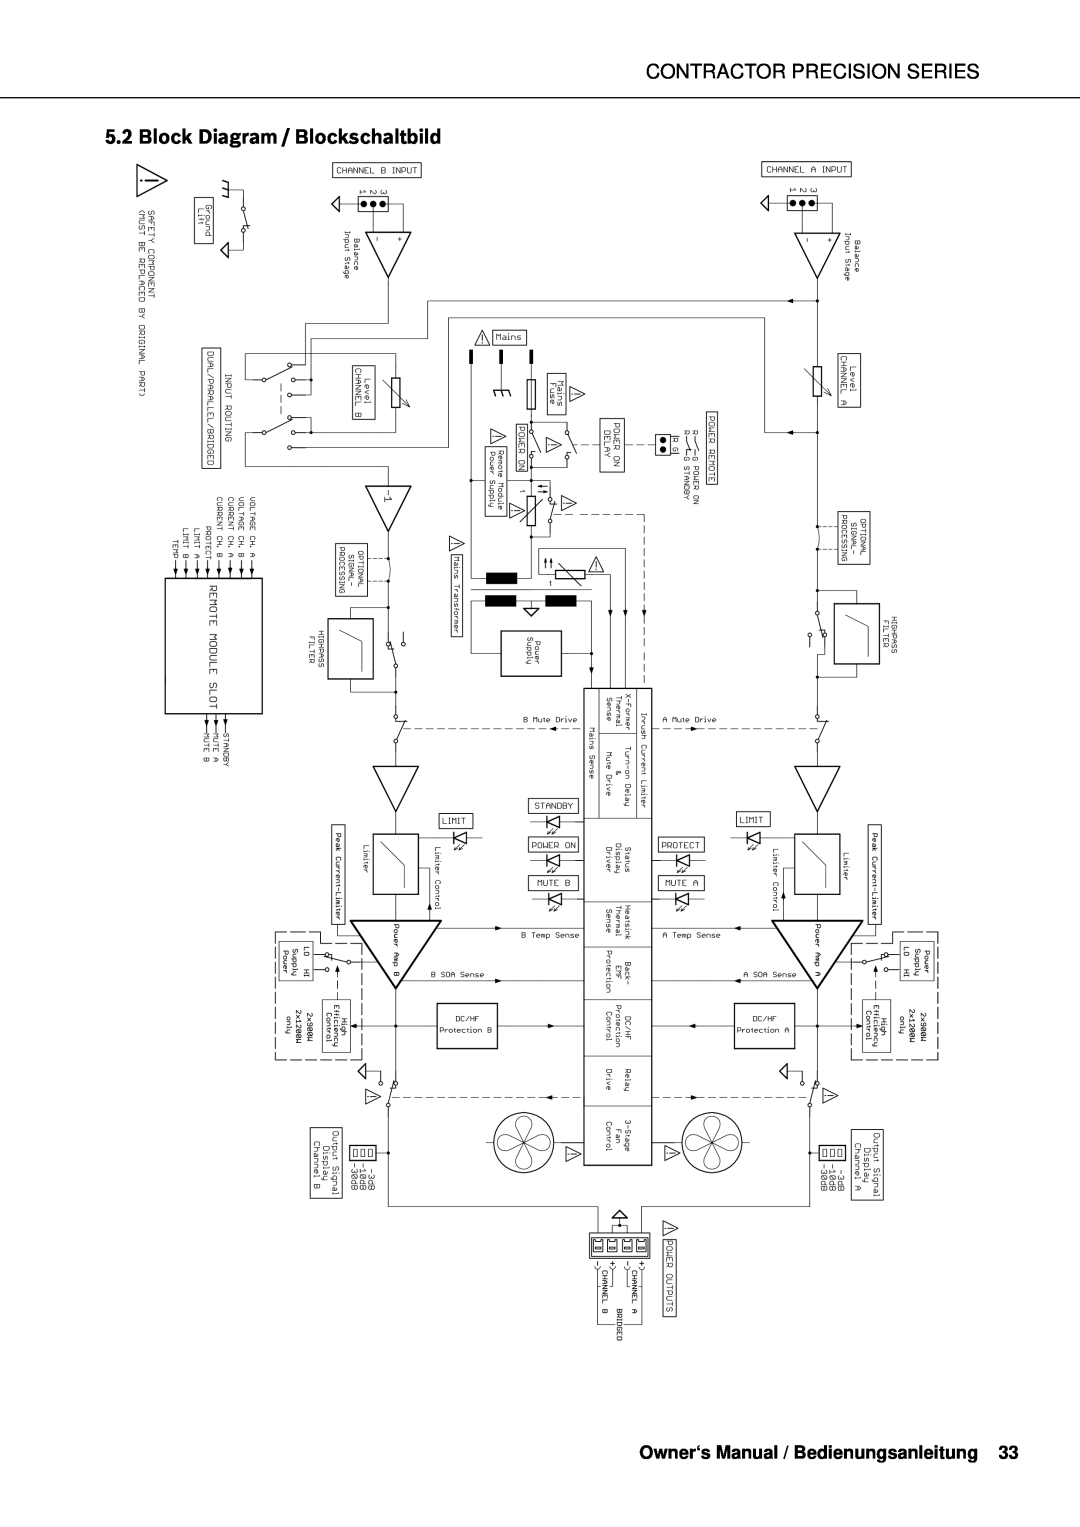 Electro-Voice CPS2.12, CPS2.6, CPS2.4, CPS2.9 owner manual Contractor Precision Series, Block Diagram / Blockschaltbild 